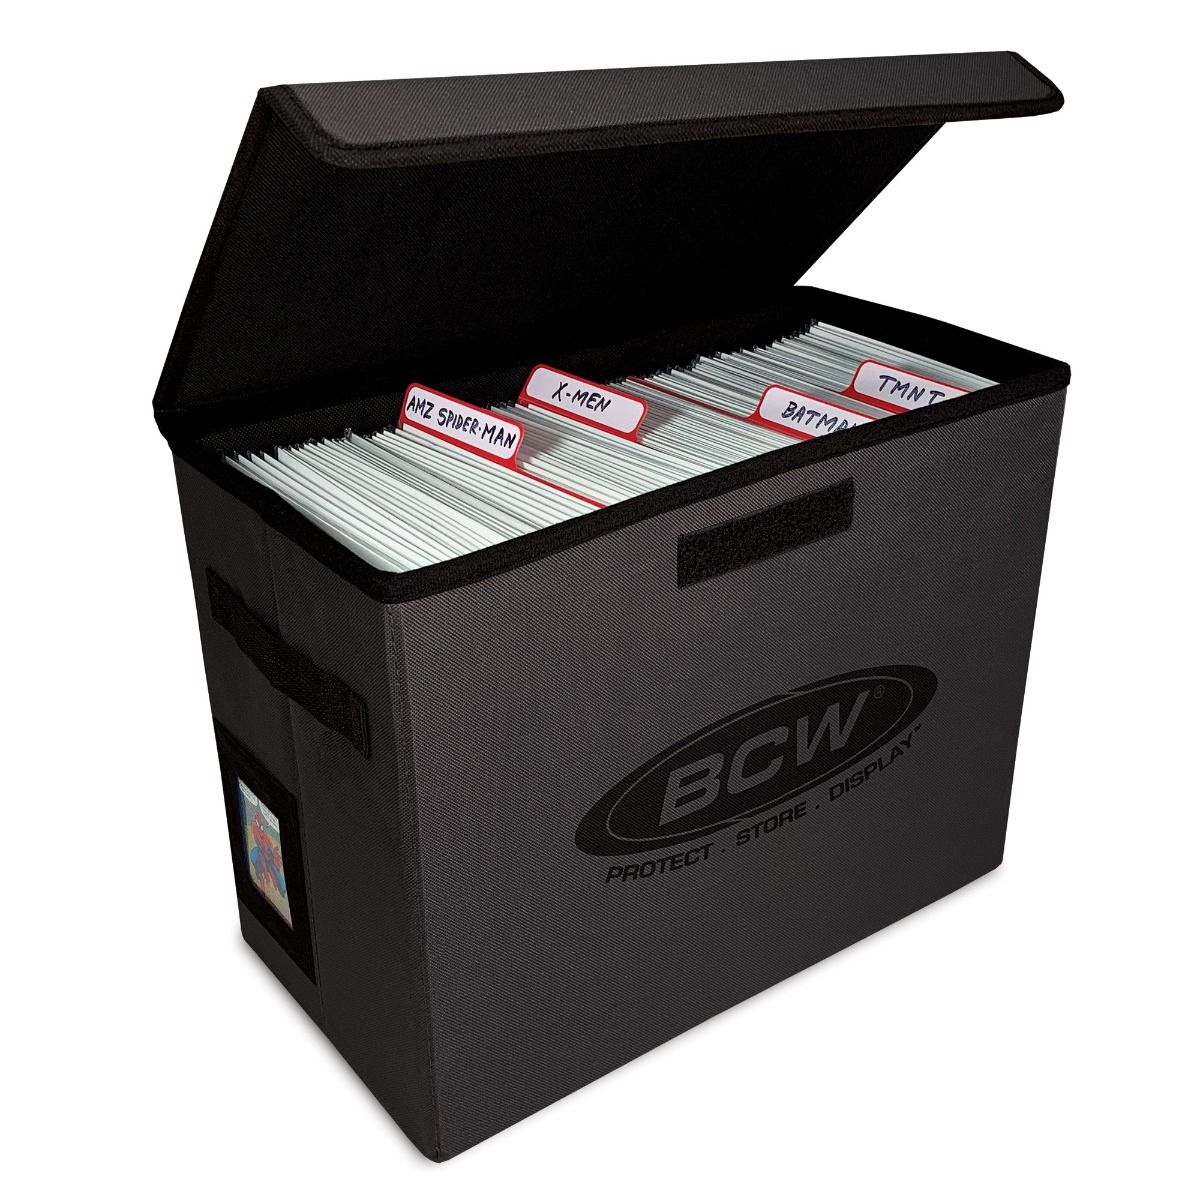 BCW Short Comic Storage Box Foldaway